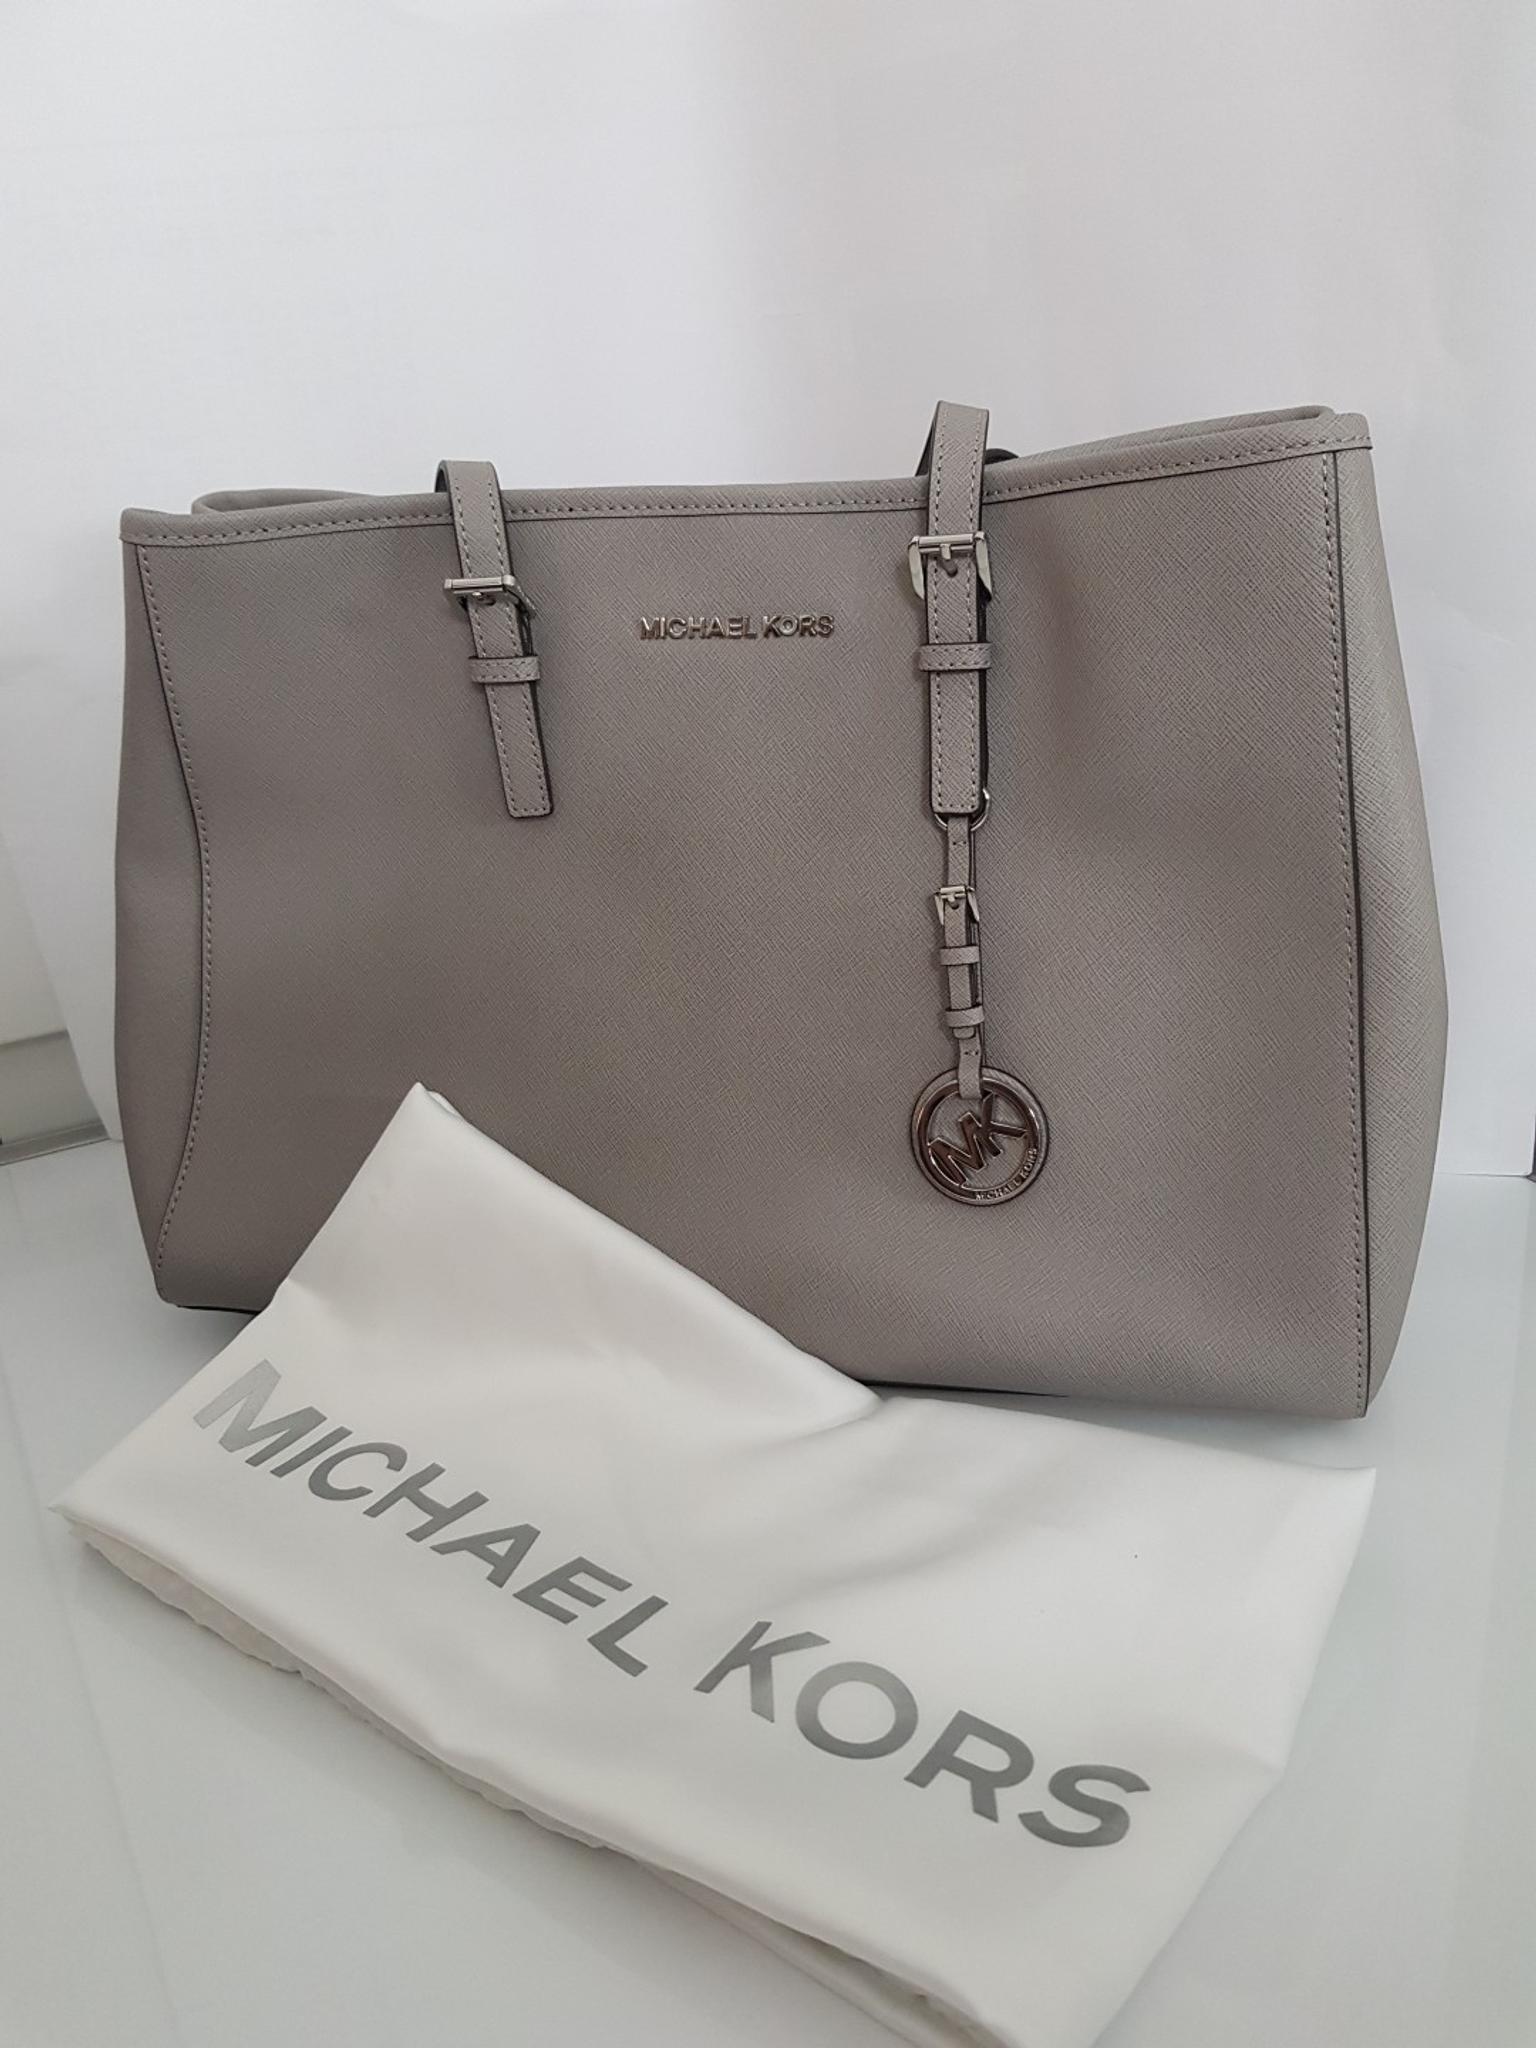 michael kors purse grey